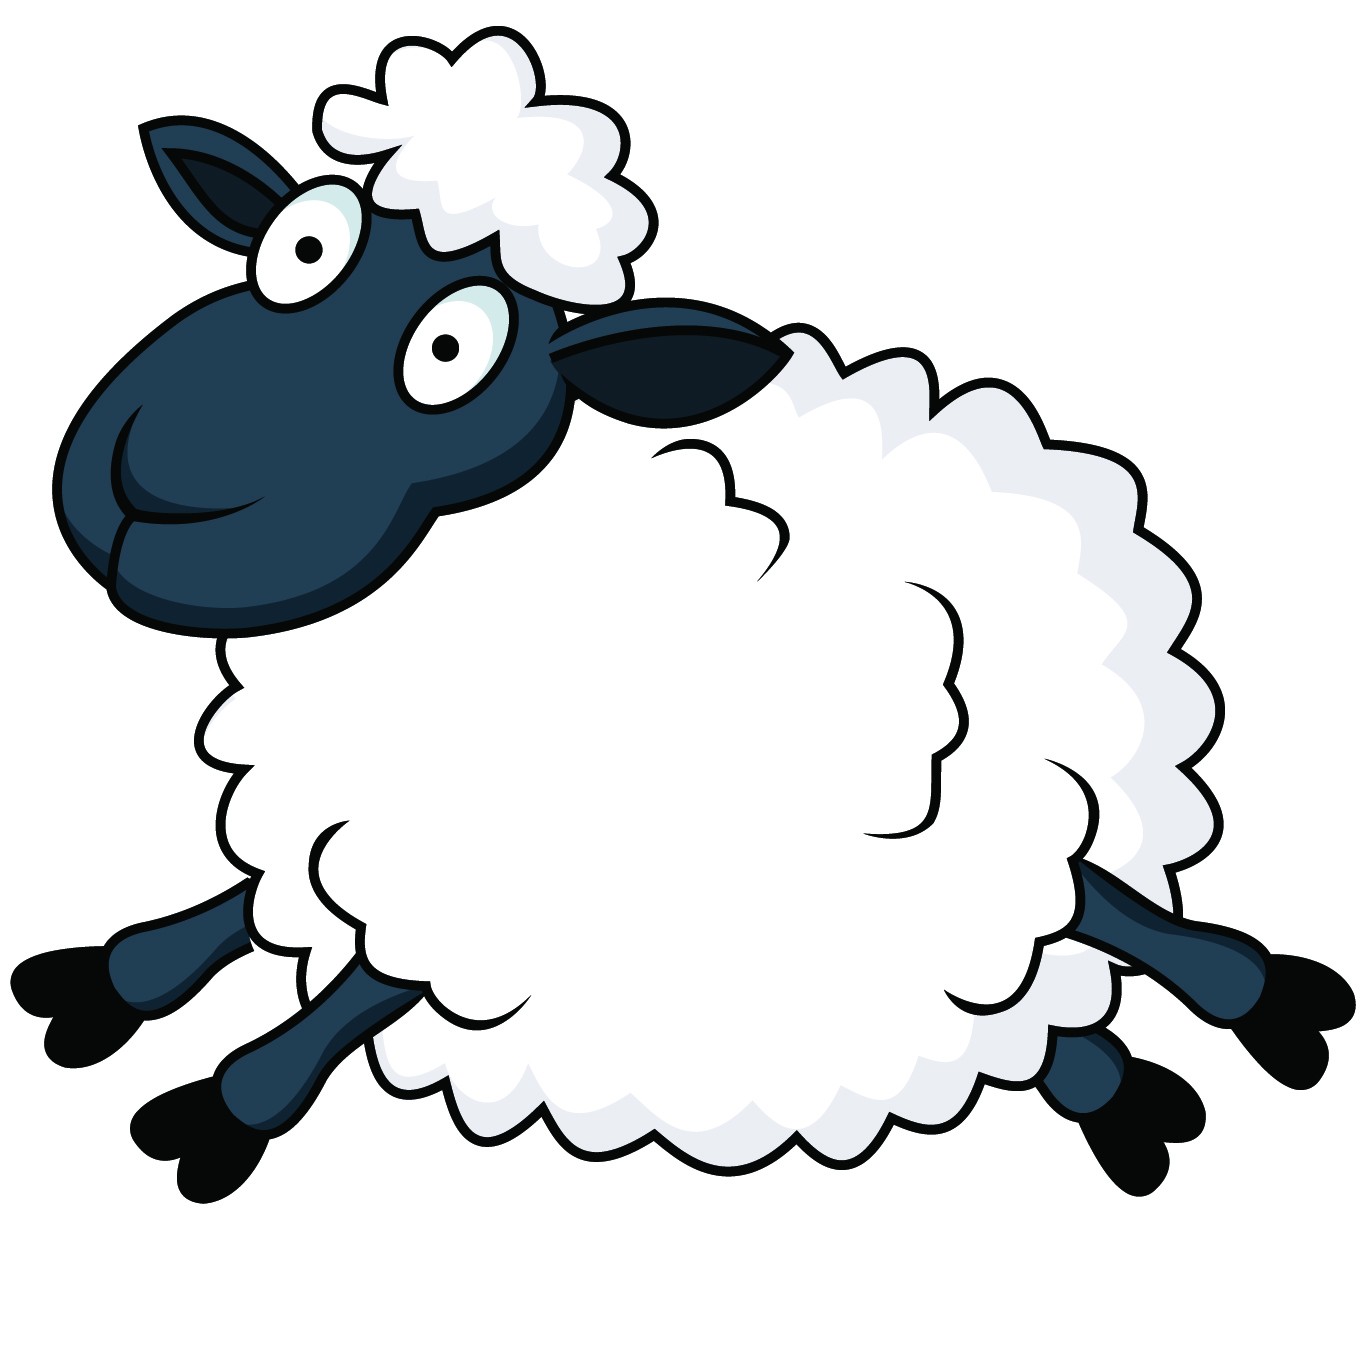 Lamb Cartoon Images